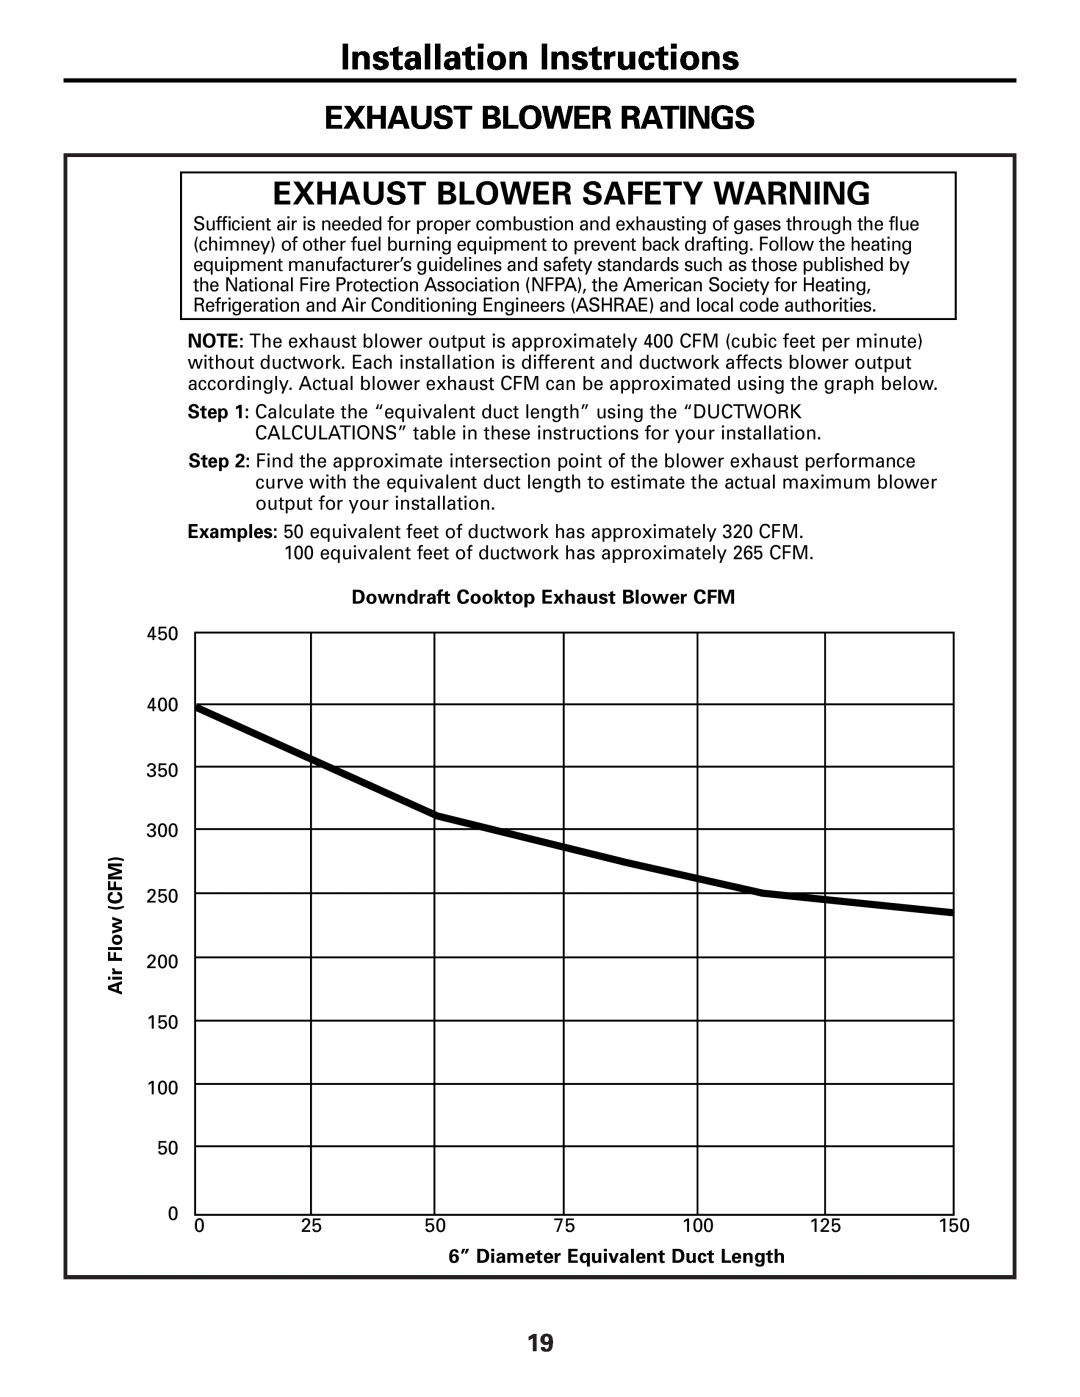 GE JP989SKSS Exhaust Blower Ratings, Exhaust Blower Safety Warning, Downdraft Cooktop Exhaust Blower CFM, Flow CFM 